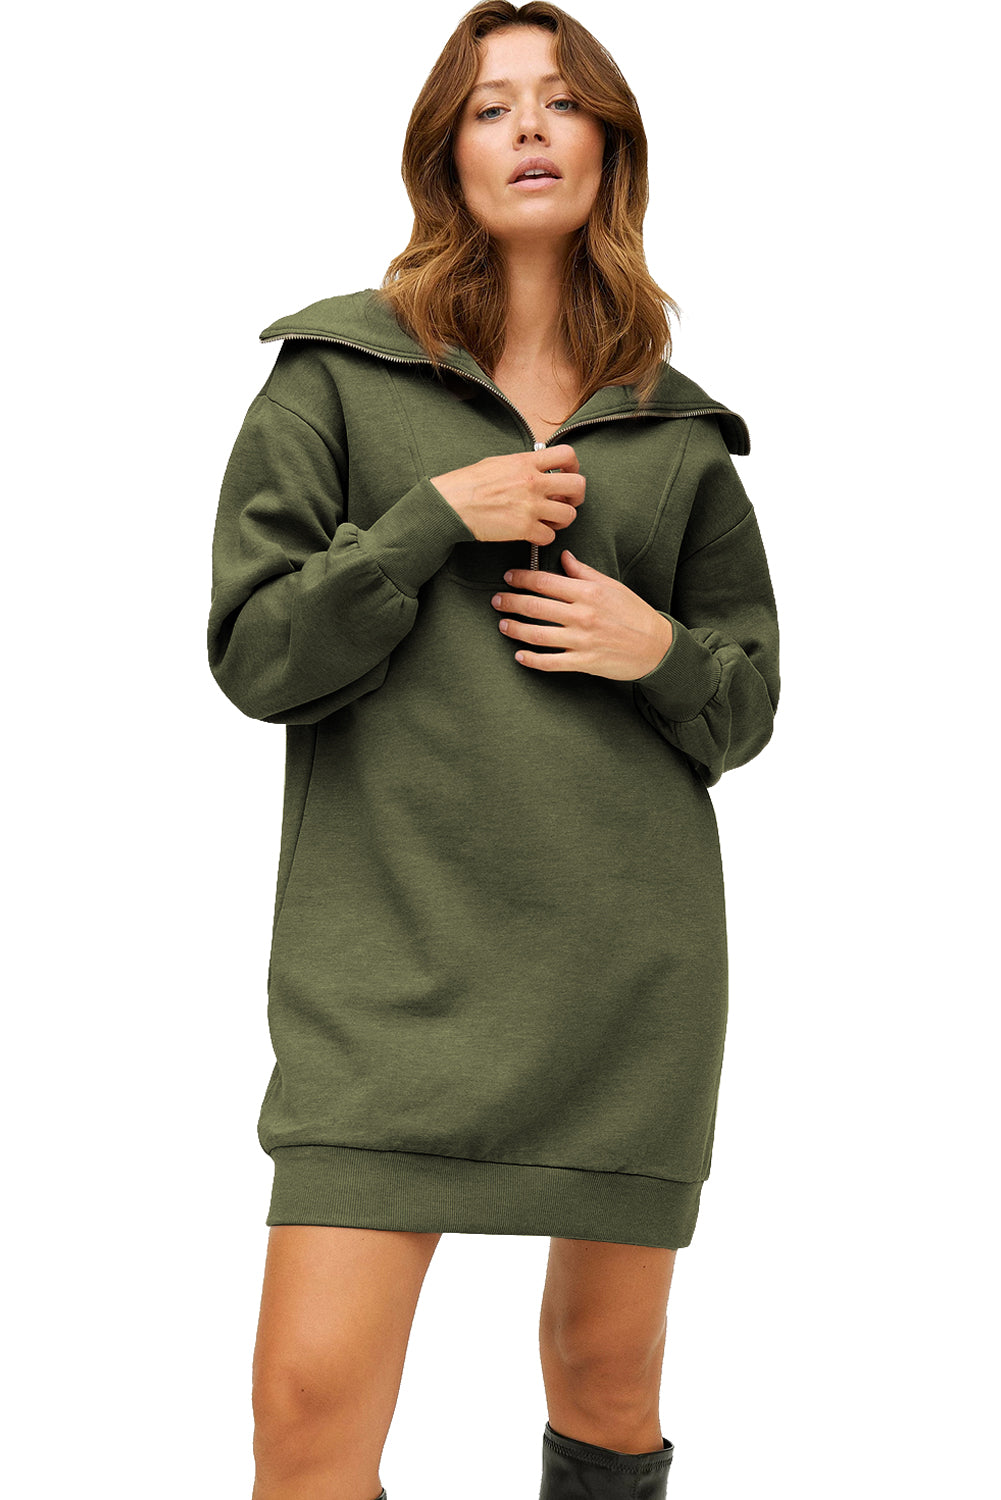 Green Solid Zipped Big Collar Sweatshirt Dress Dresses JT's Designer Fashion